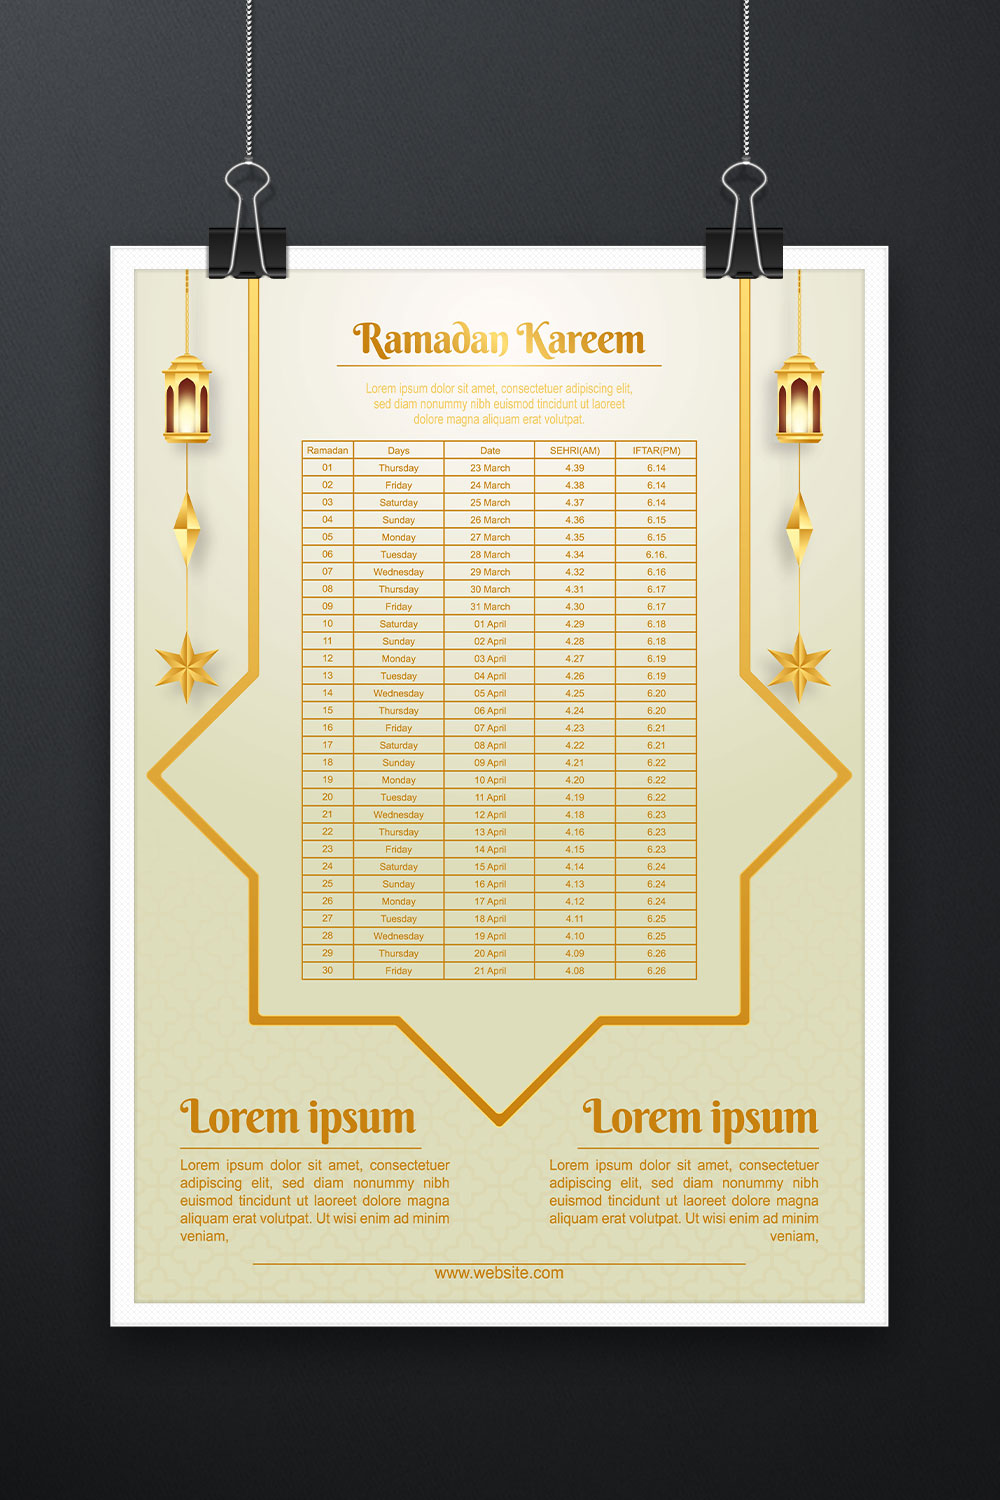 Ramadan Kareem Islamic calendar template and sehri ifter time schedule pinterest preview image.